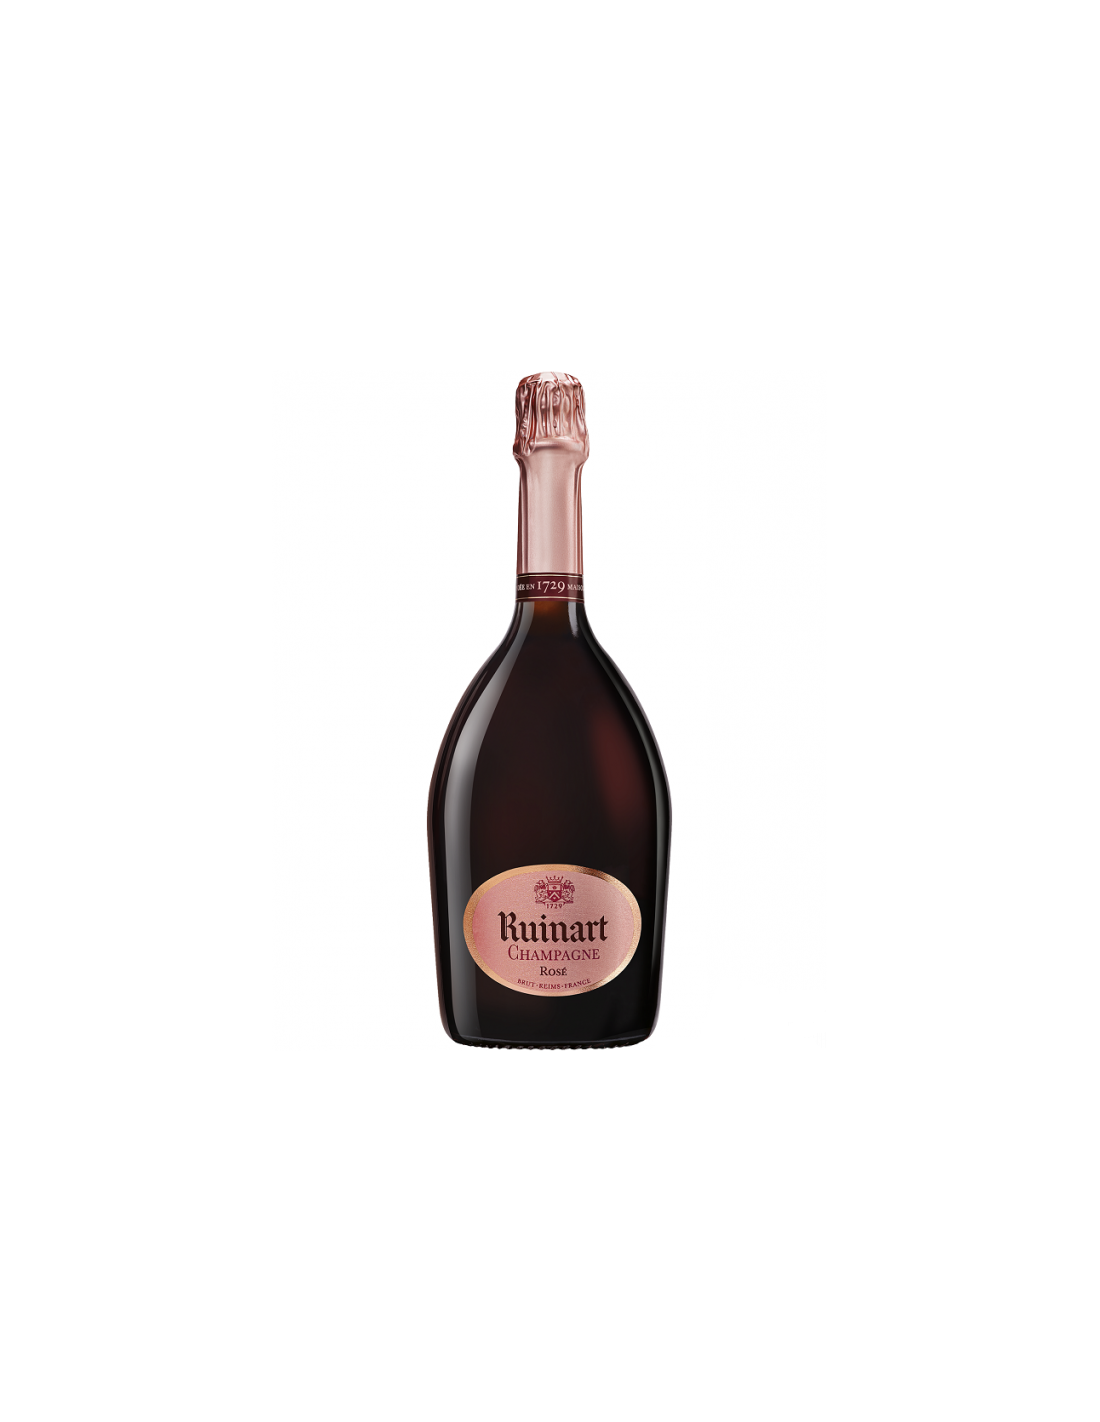 Sampanie roze, Ruinart Champagne, 0.75L, 12.50% alc., Franta